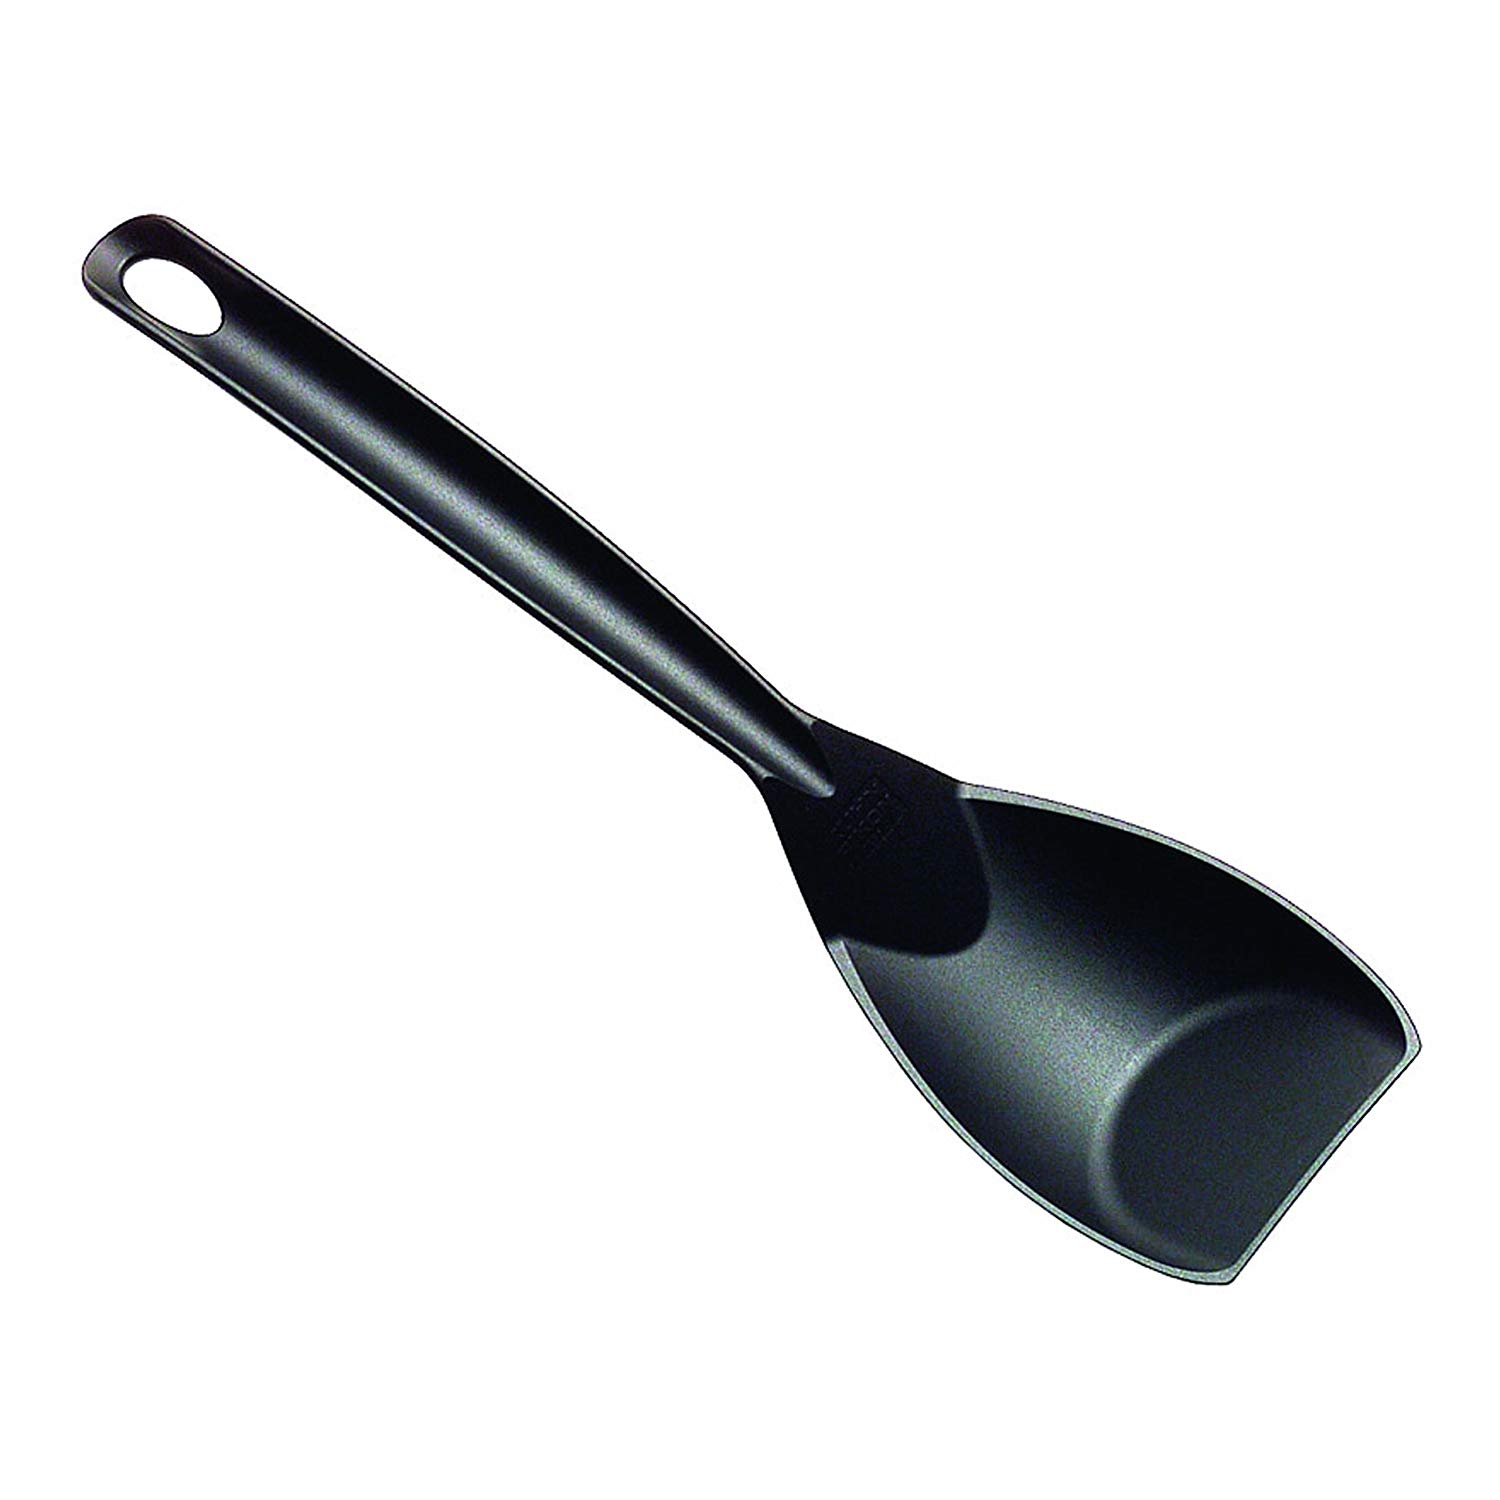 Kuhn Rikon Cooks Spoon